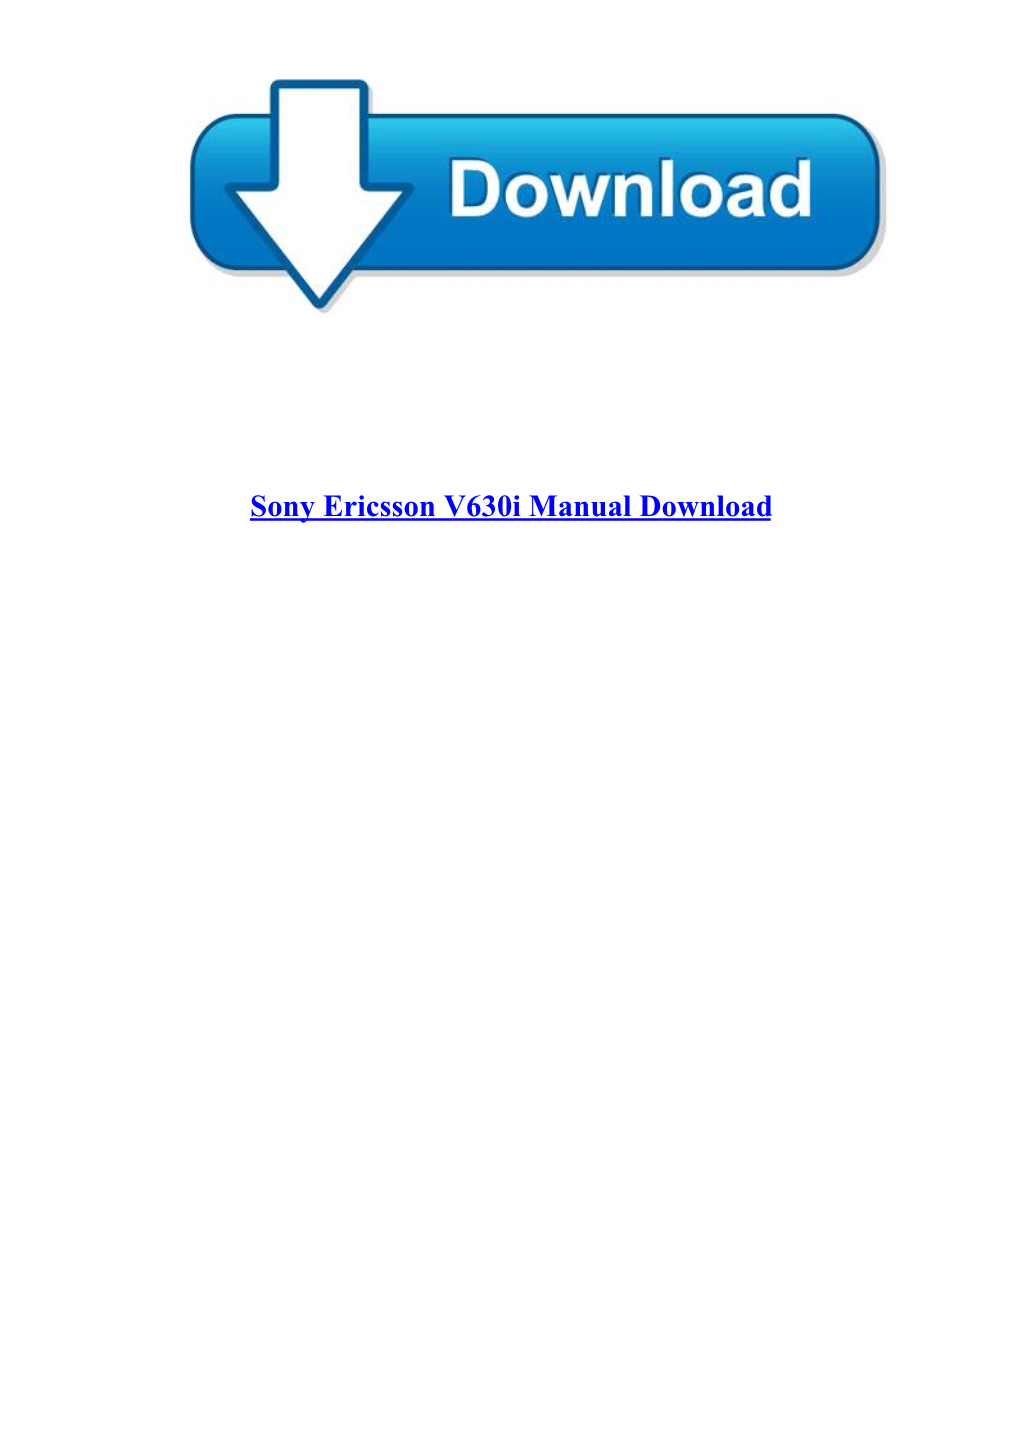 Sony Ericsson V630i Manual Download Sony Ericsson V630i Manual